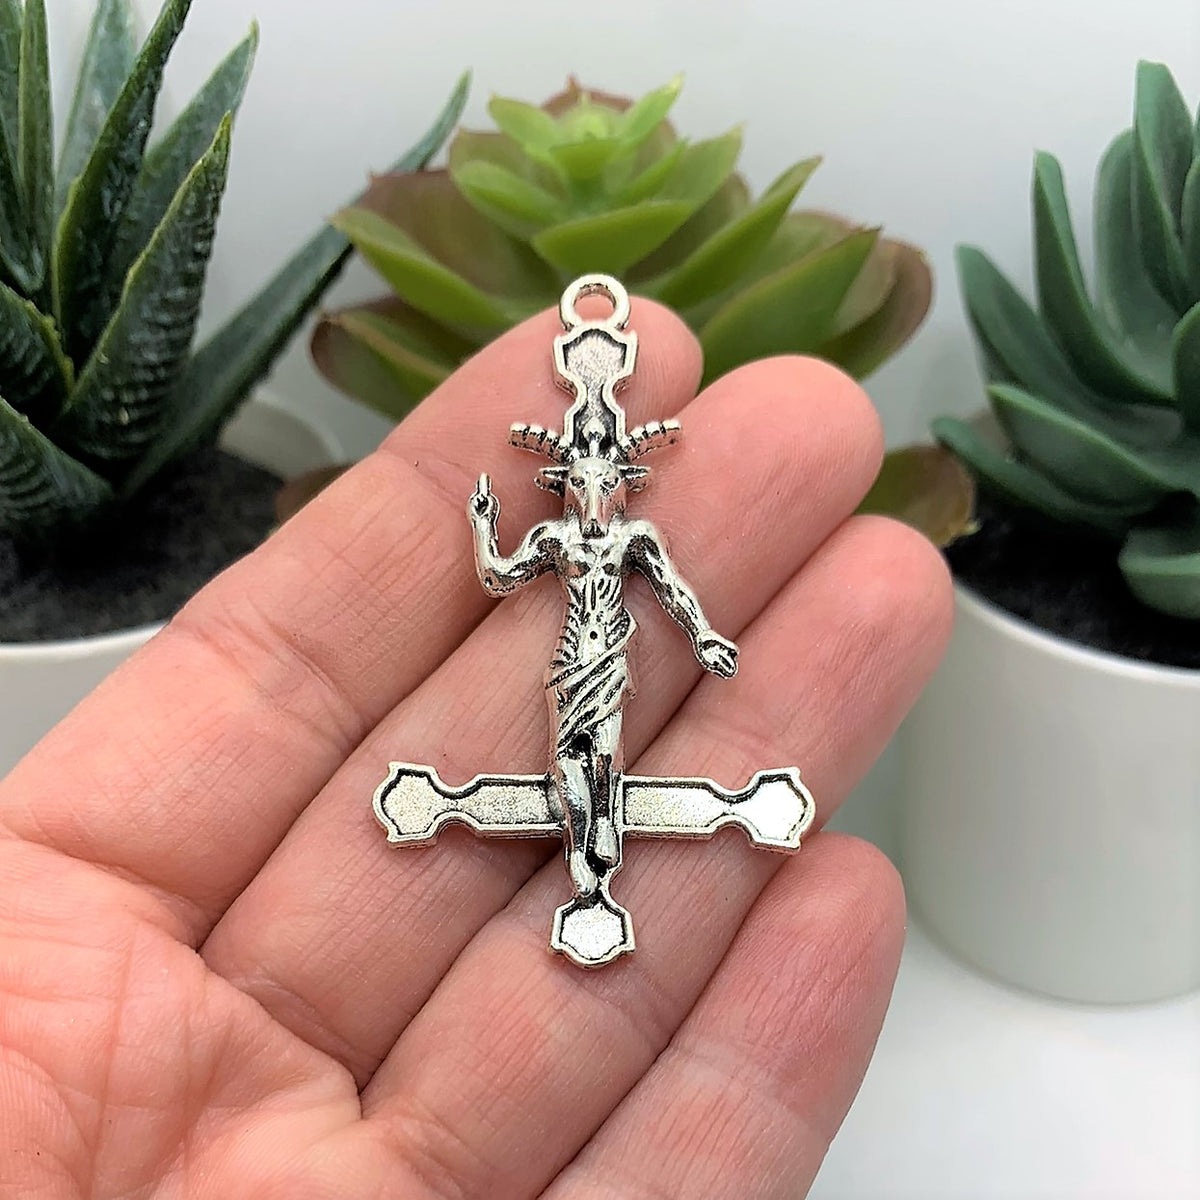 Upside down cross - necklace – forbidden alchemy